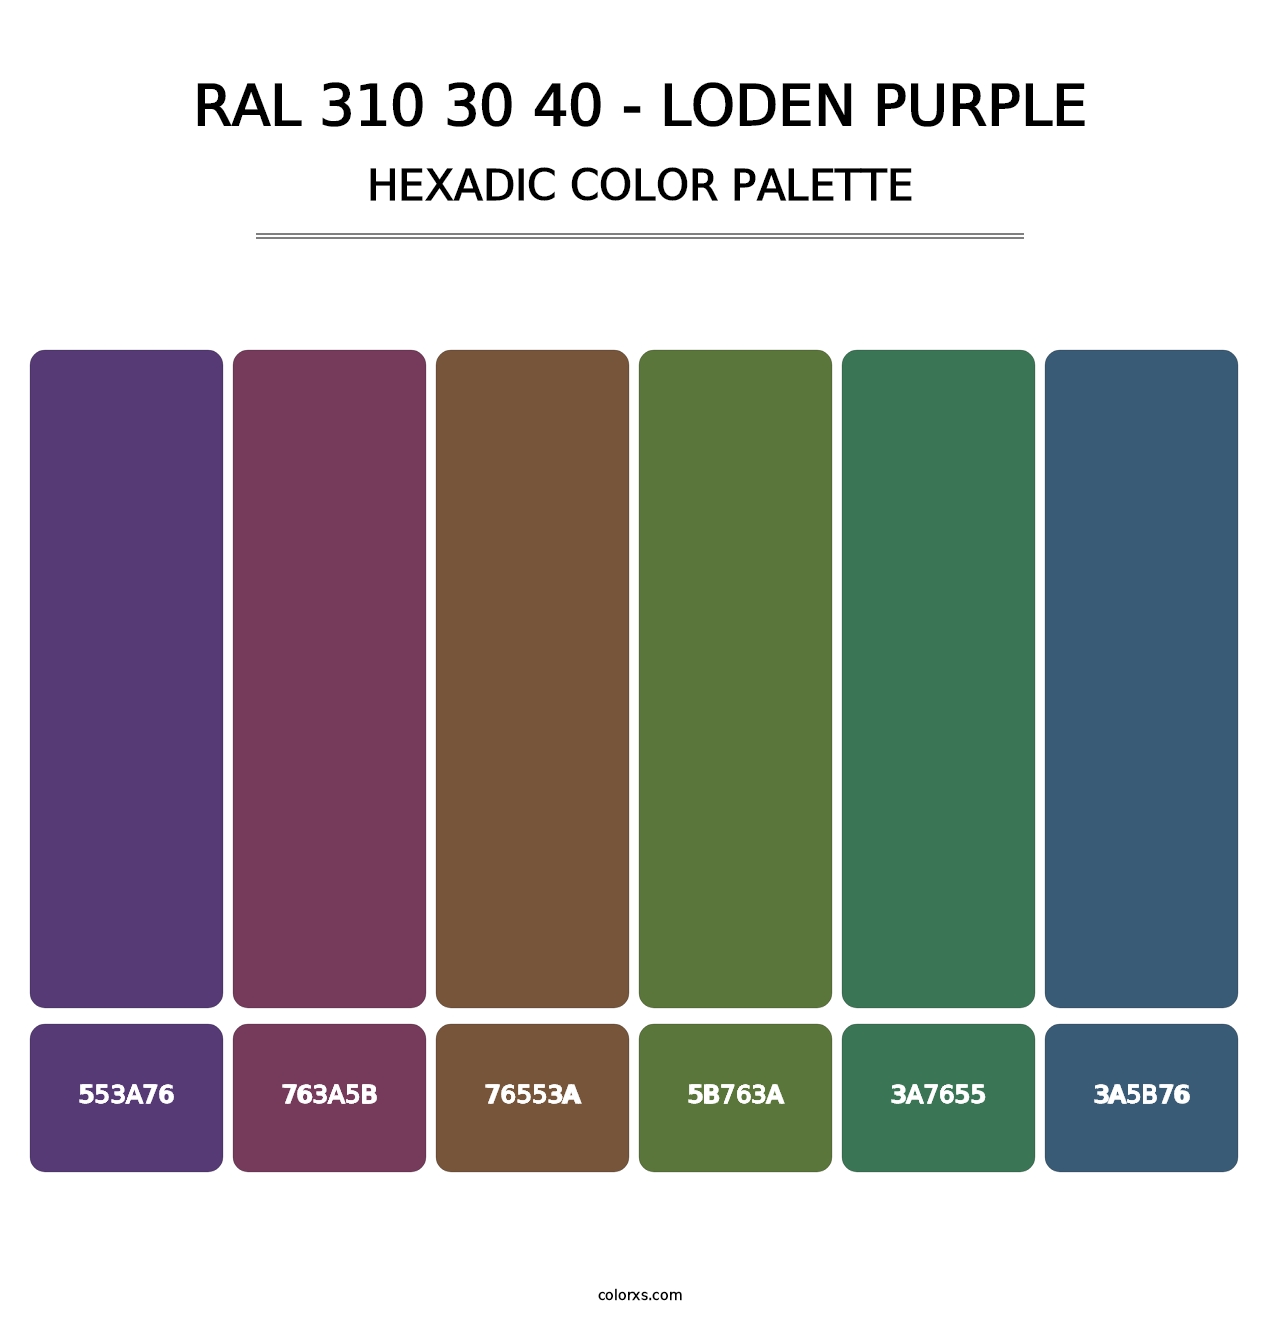 RAL 310 30 40 - Loden Purple - Hexadic Color Palette